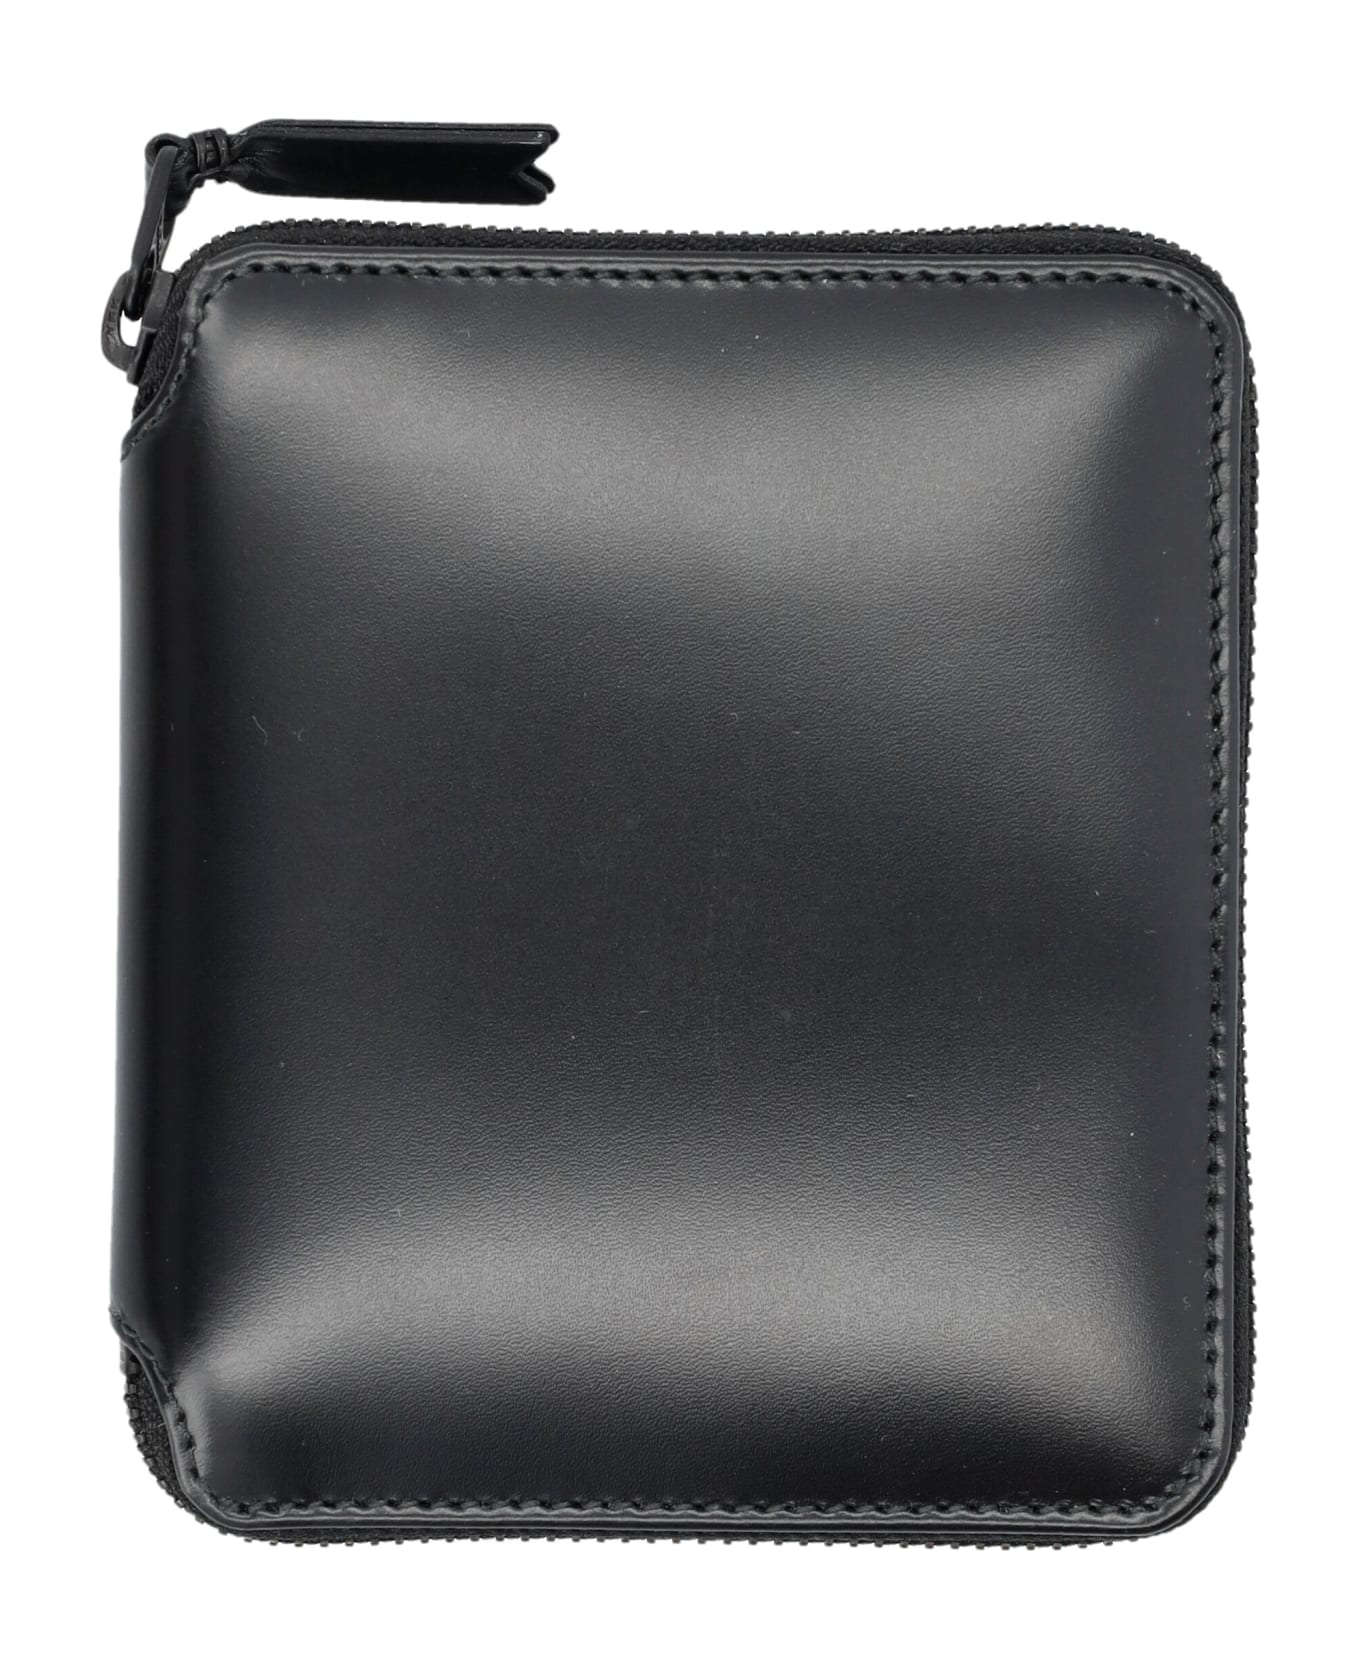 Comme des Garçons Wallet Very Black Vertical Zip Around Wallet - BLACK 財布